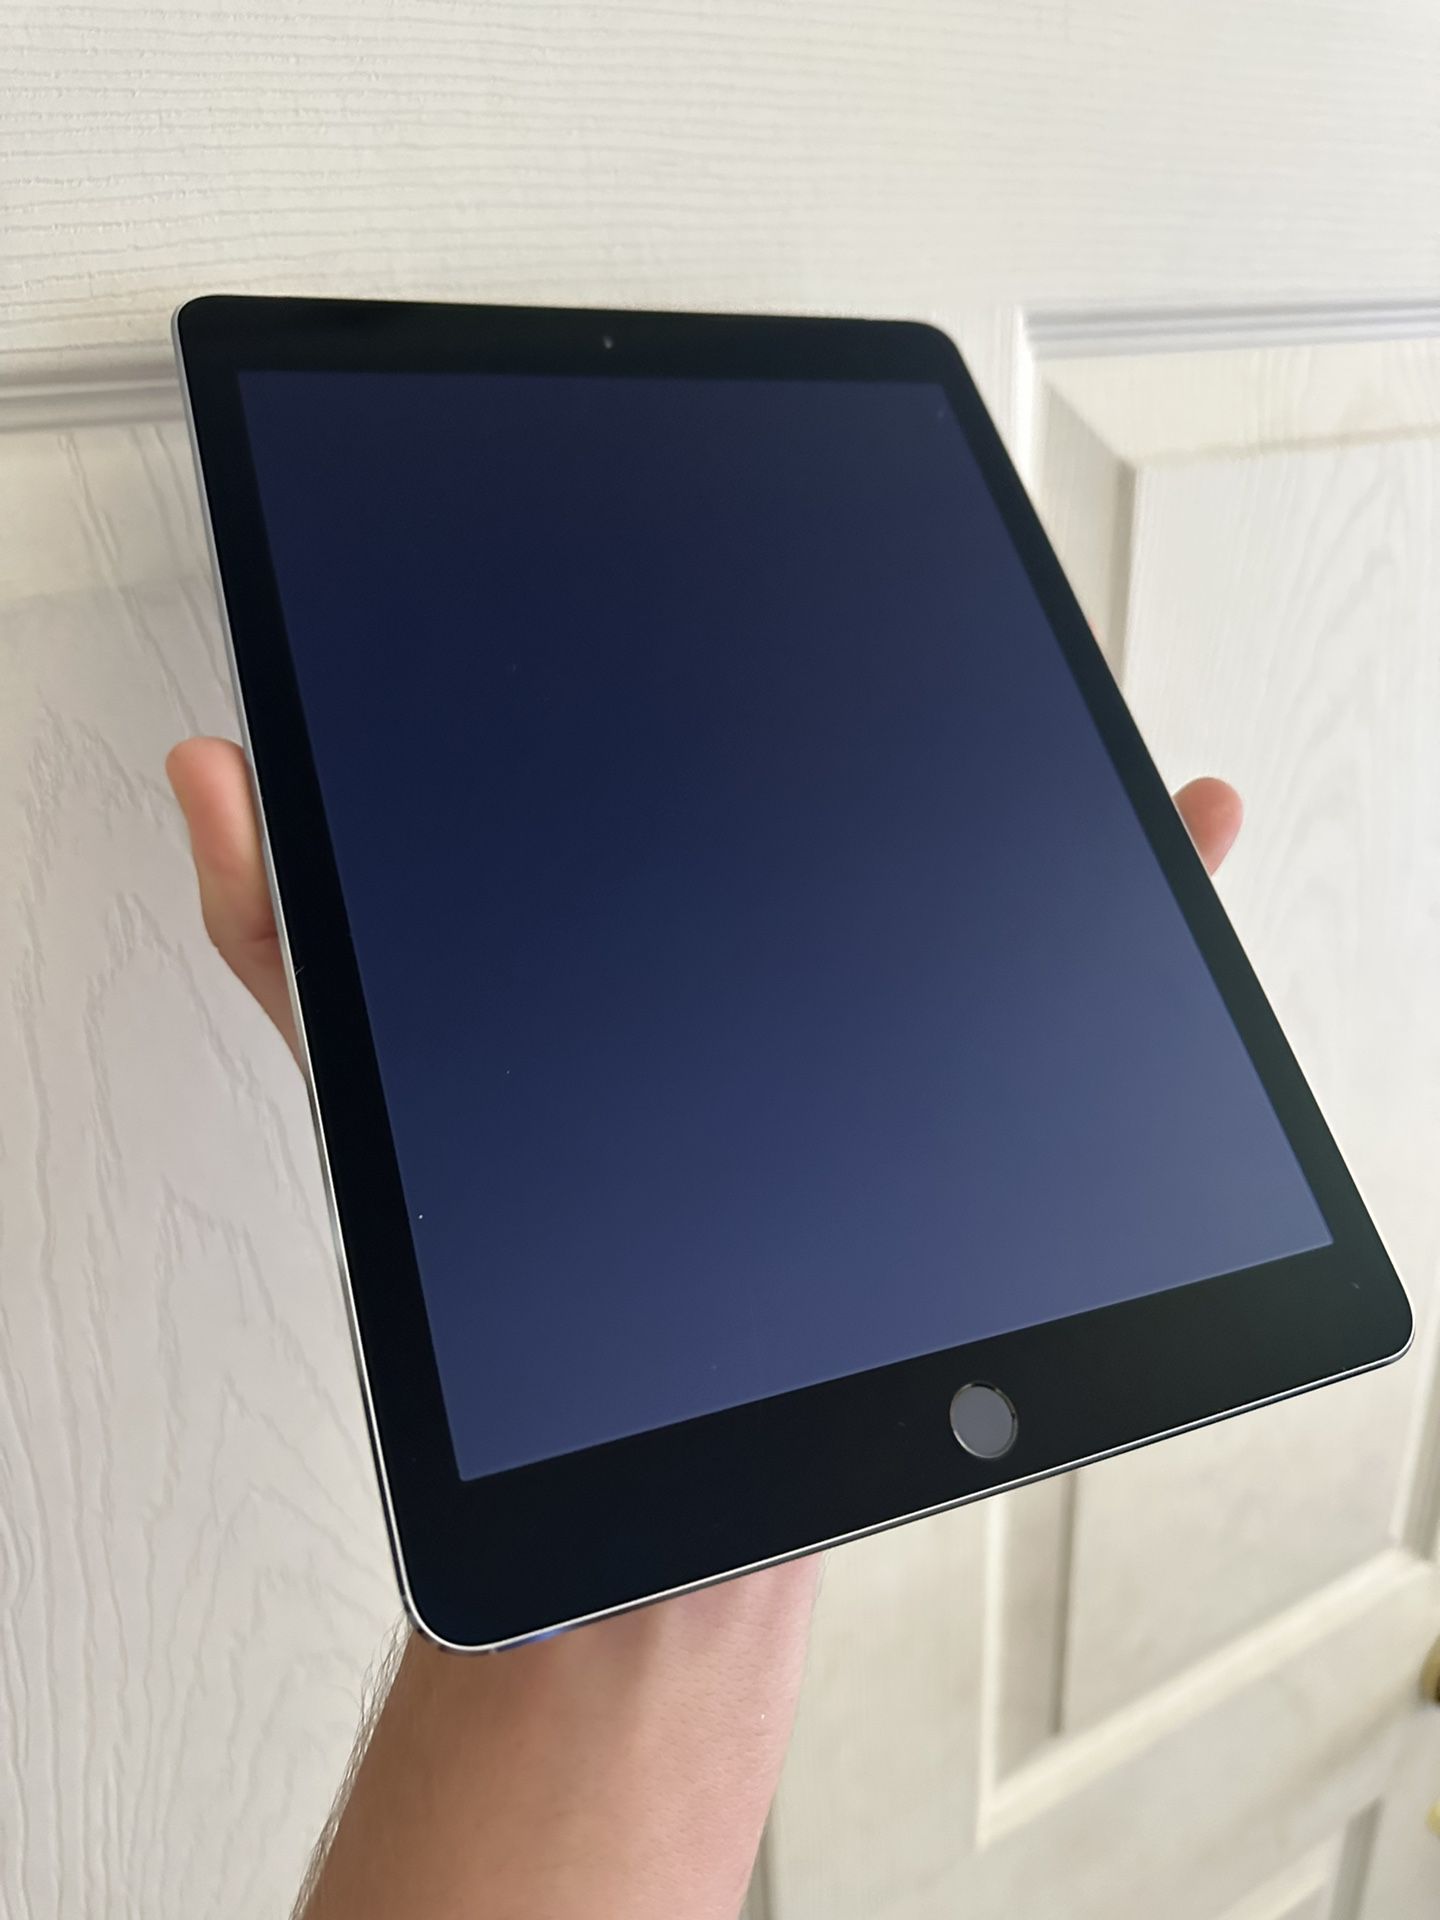 Apple iPad Air 2 Tablet